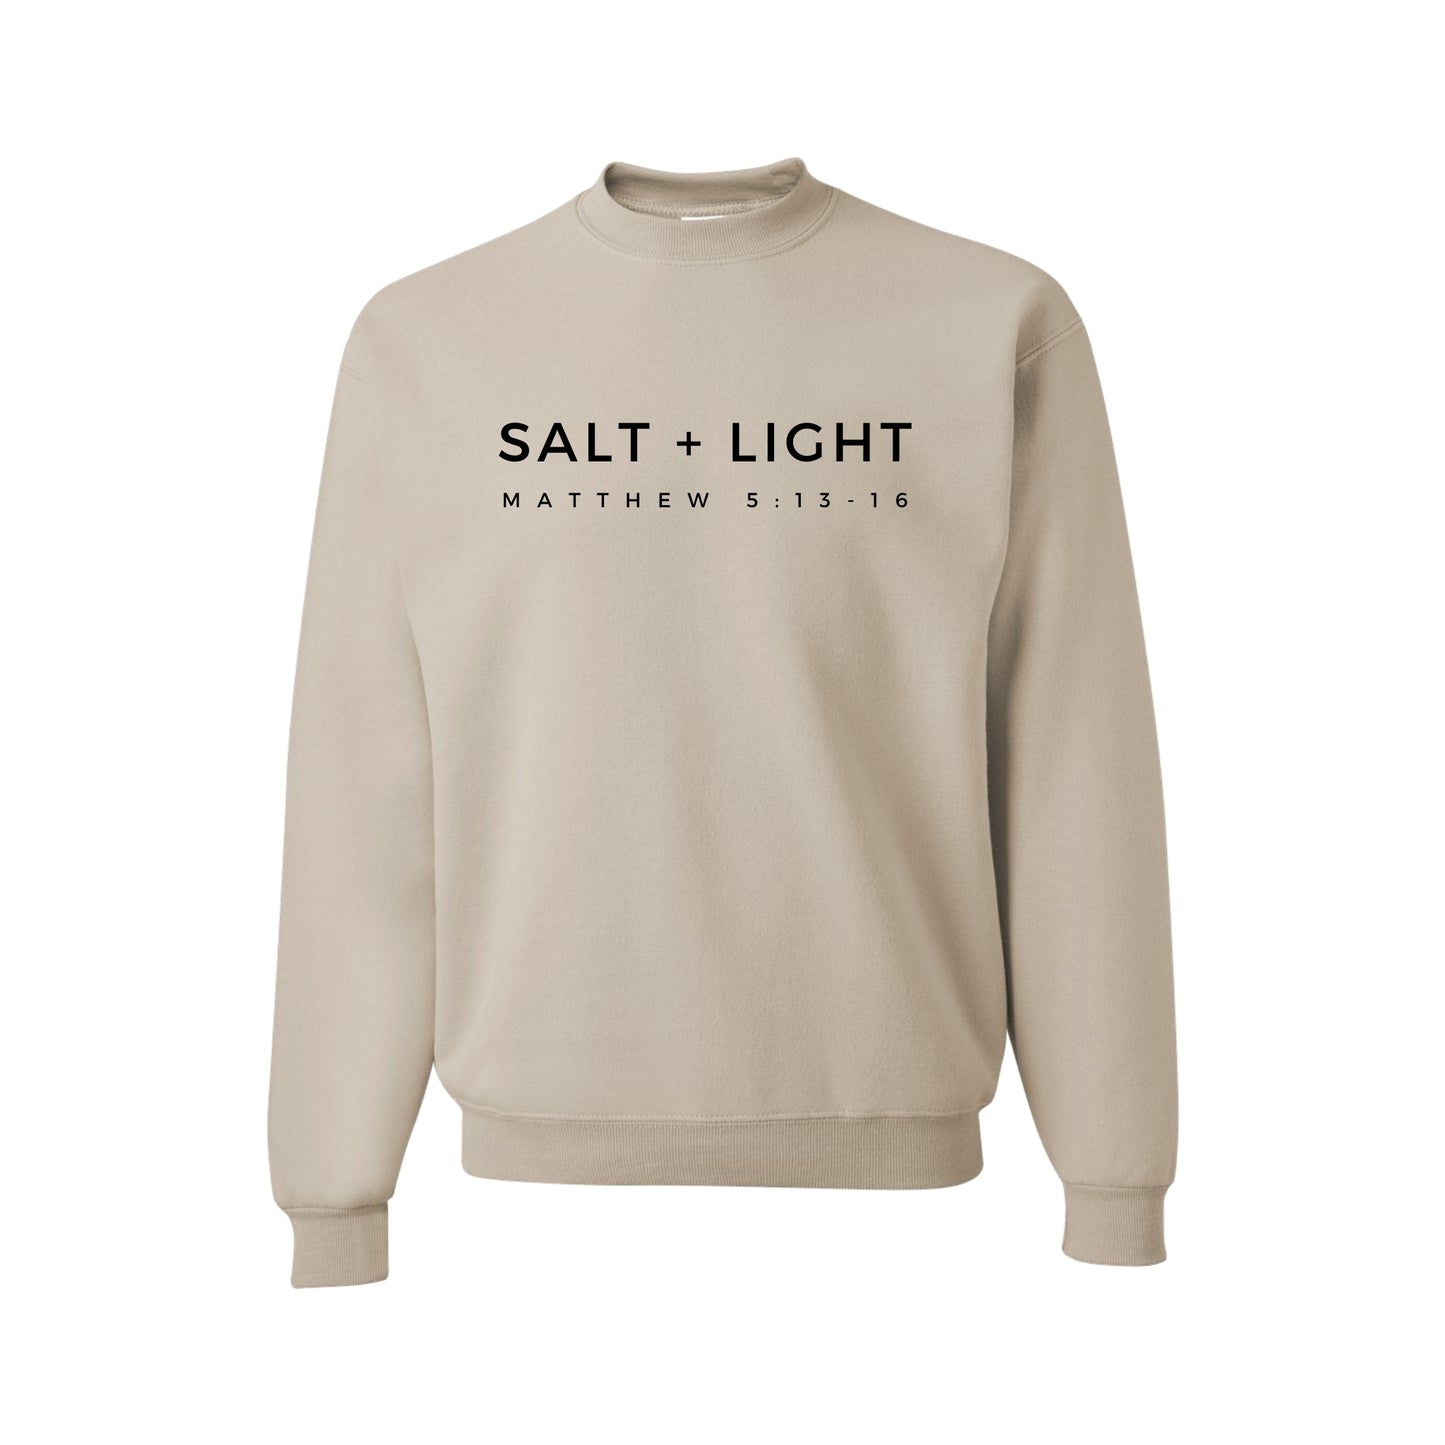 SALT + LIGHT CREW